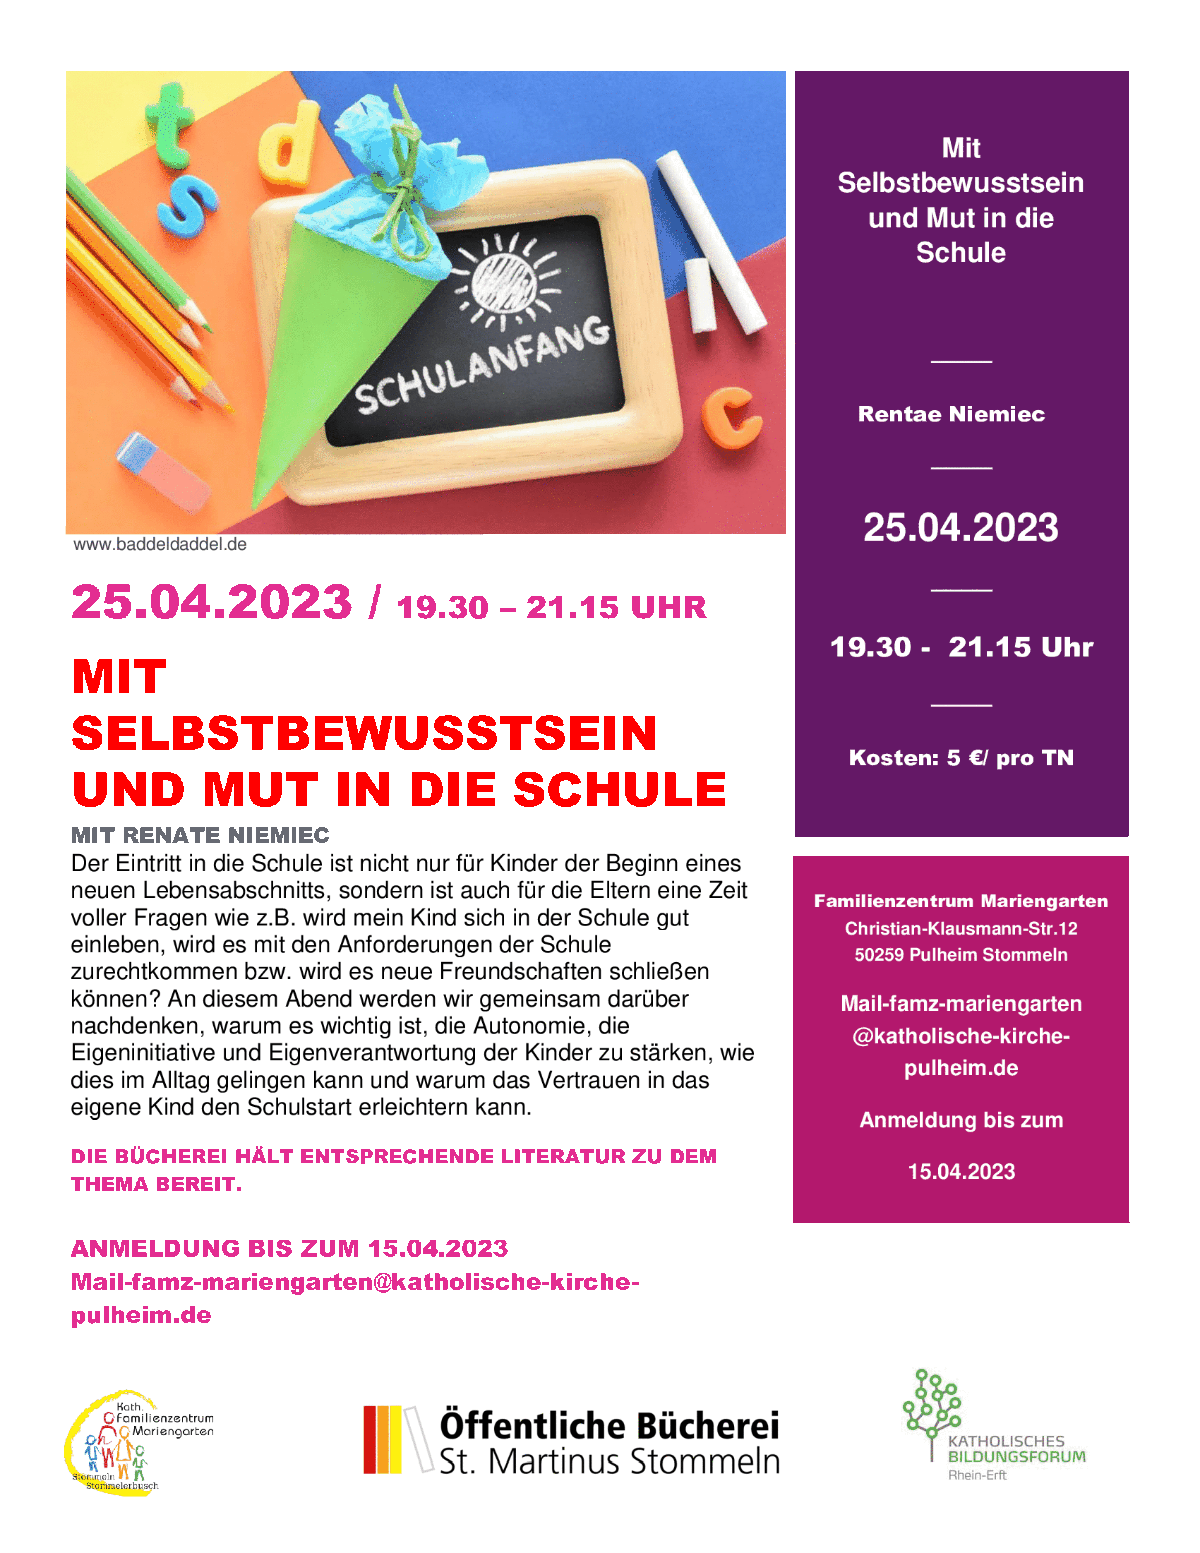 Plakat_Selbstbewusstsein-in-die-Schule_25042023 (c) www.baddeldaddel.de